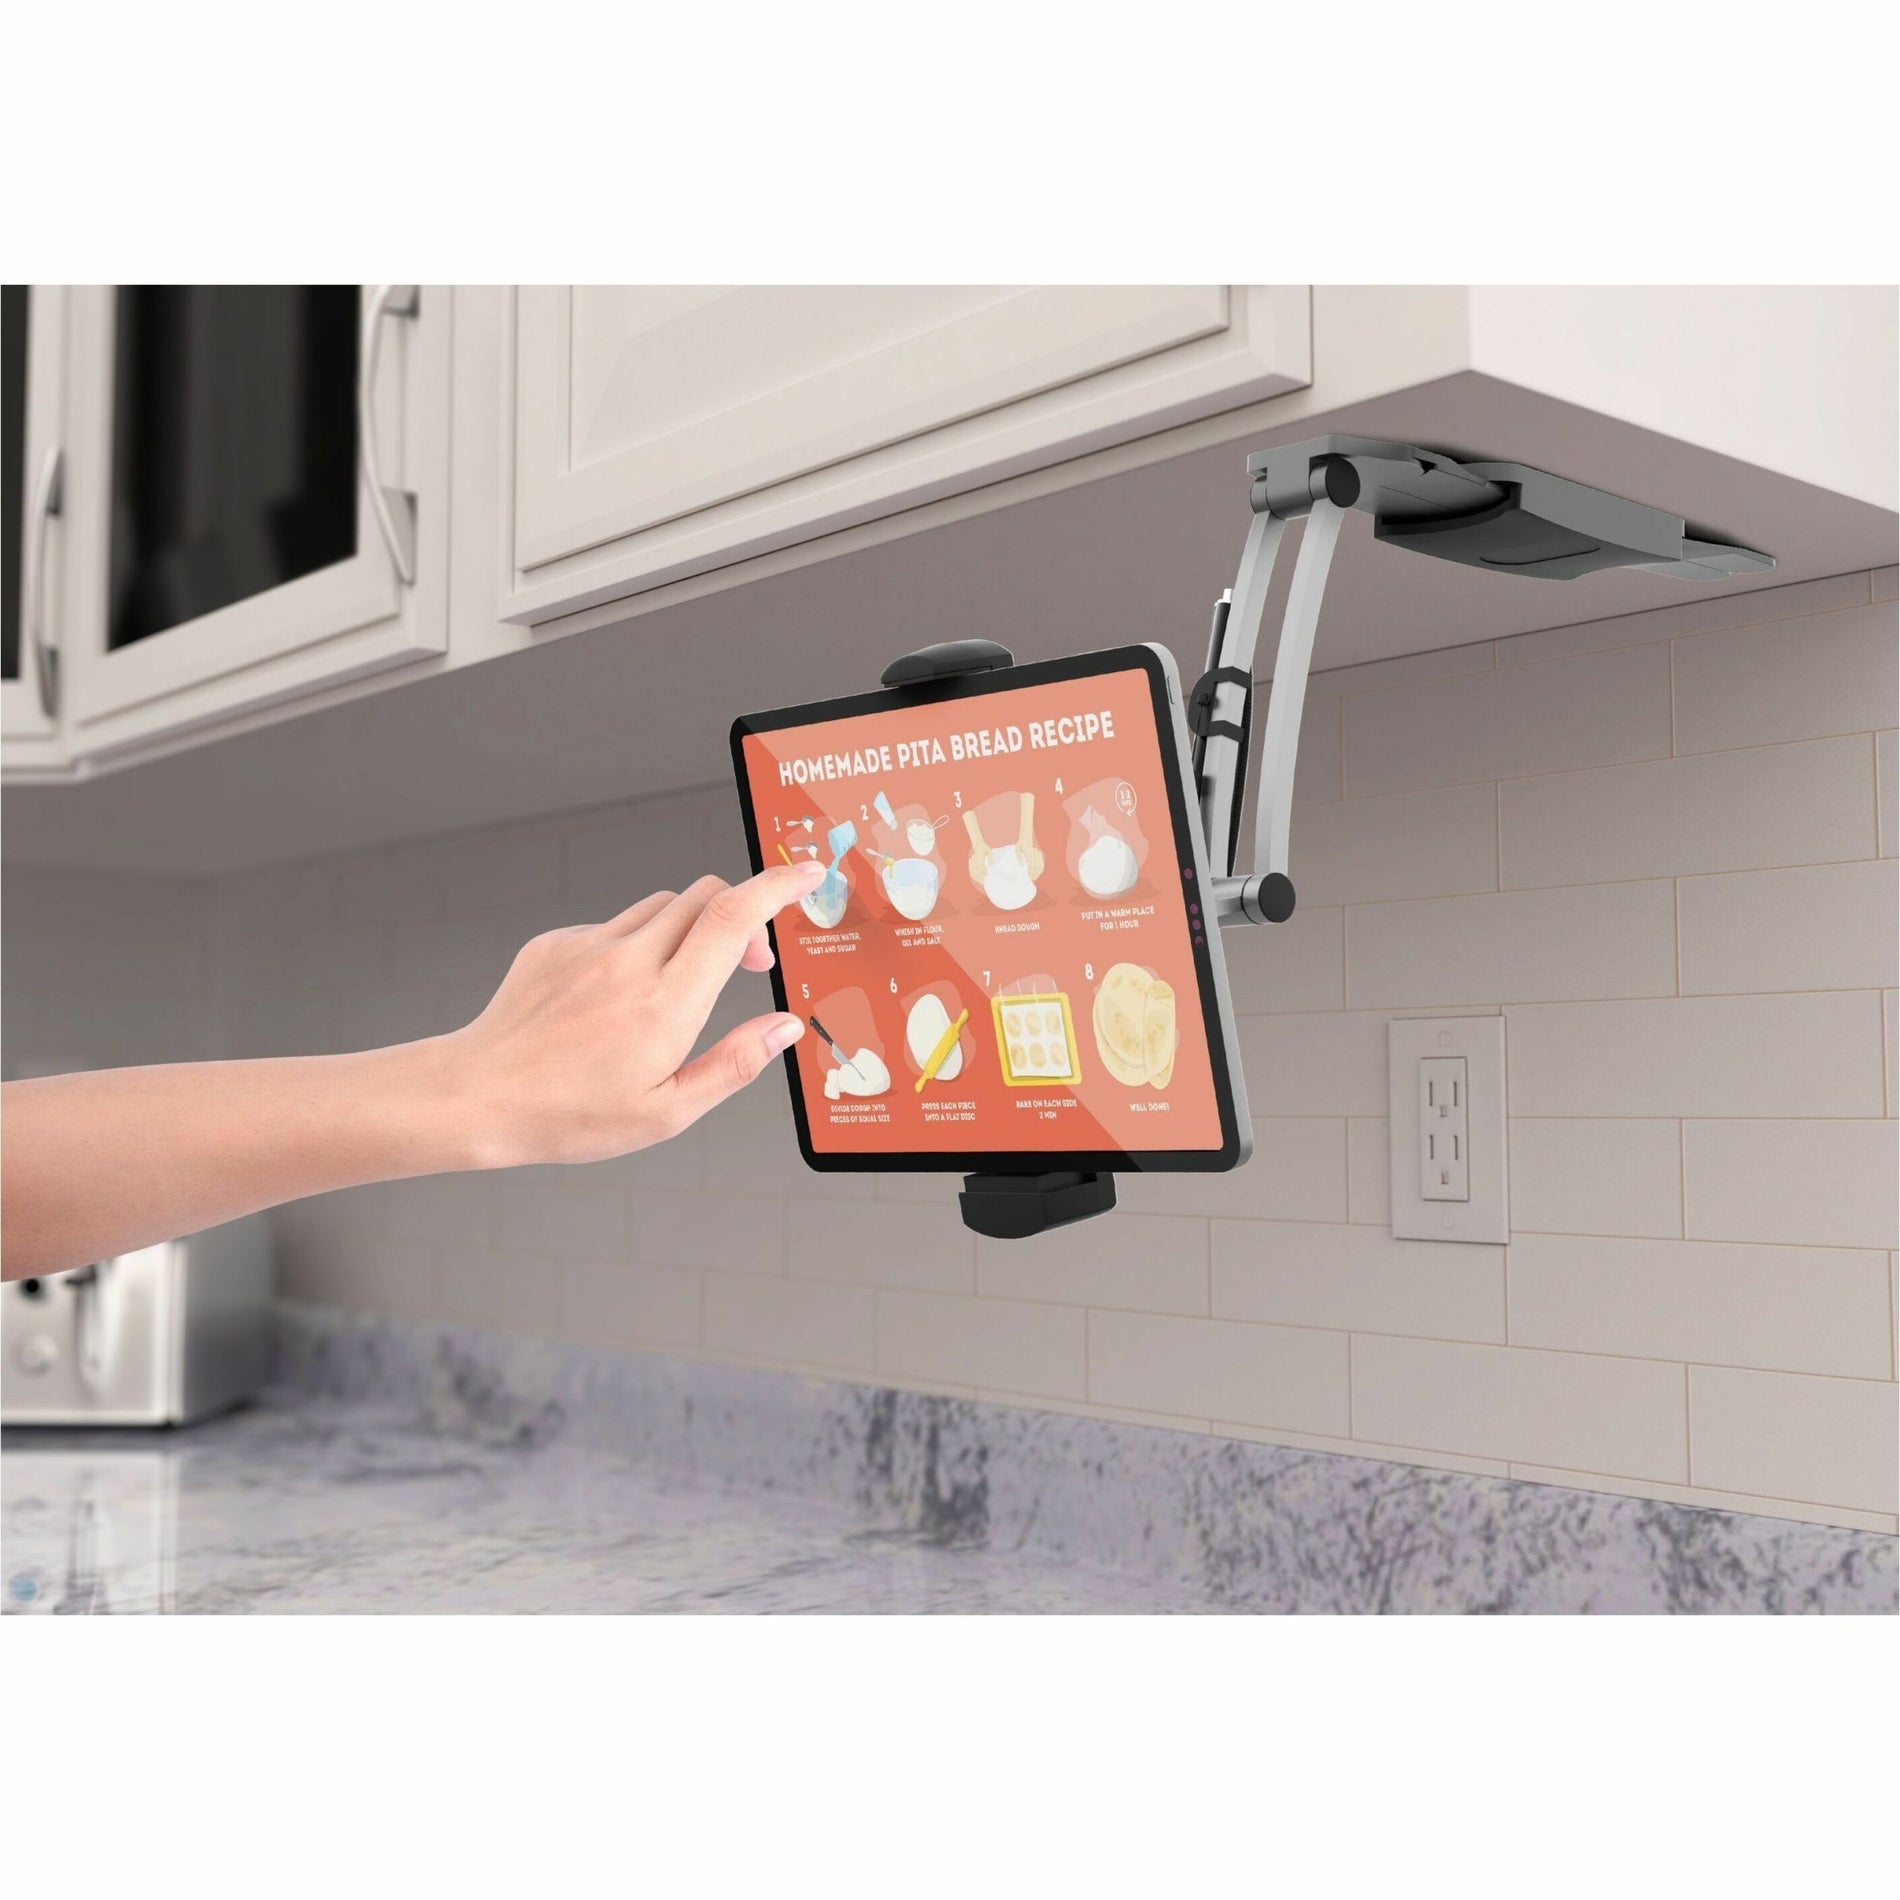 CTA Digital PAD-KMSB Multi-Flex Tablet Stand and Mount, Adjustable, 360° Rotation, Pivot, Durable, Compact, Lightweight, Key Lock